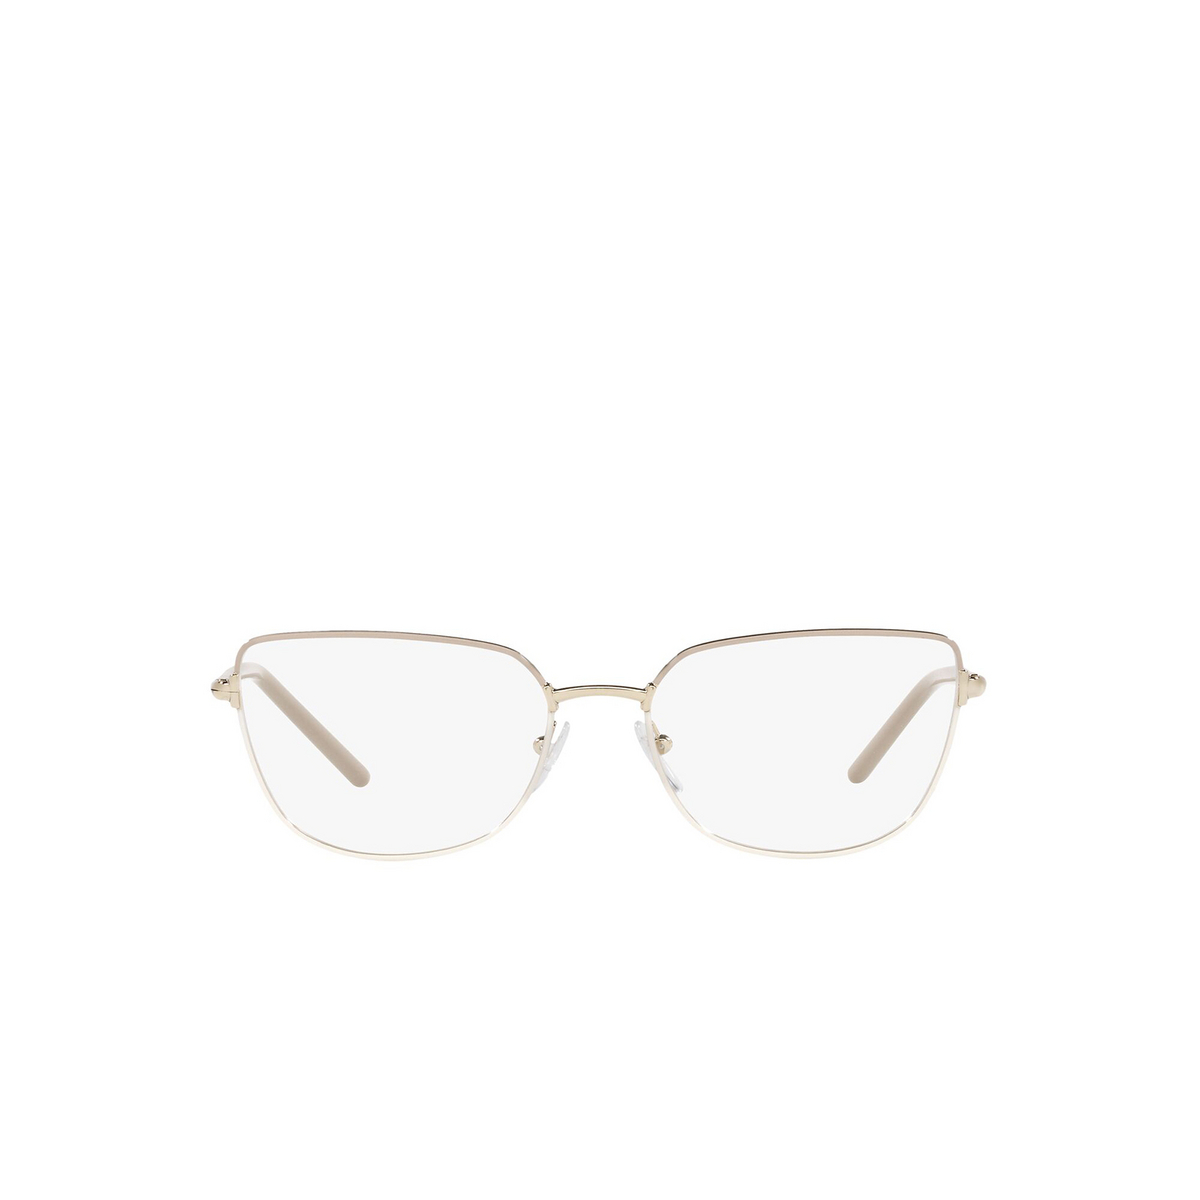 Prada® Butterfly Eyeglasses: PR 59YV color Beige / White 06I1O1 - front view.